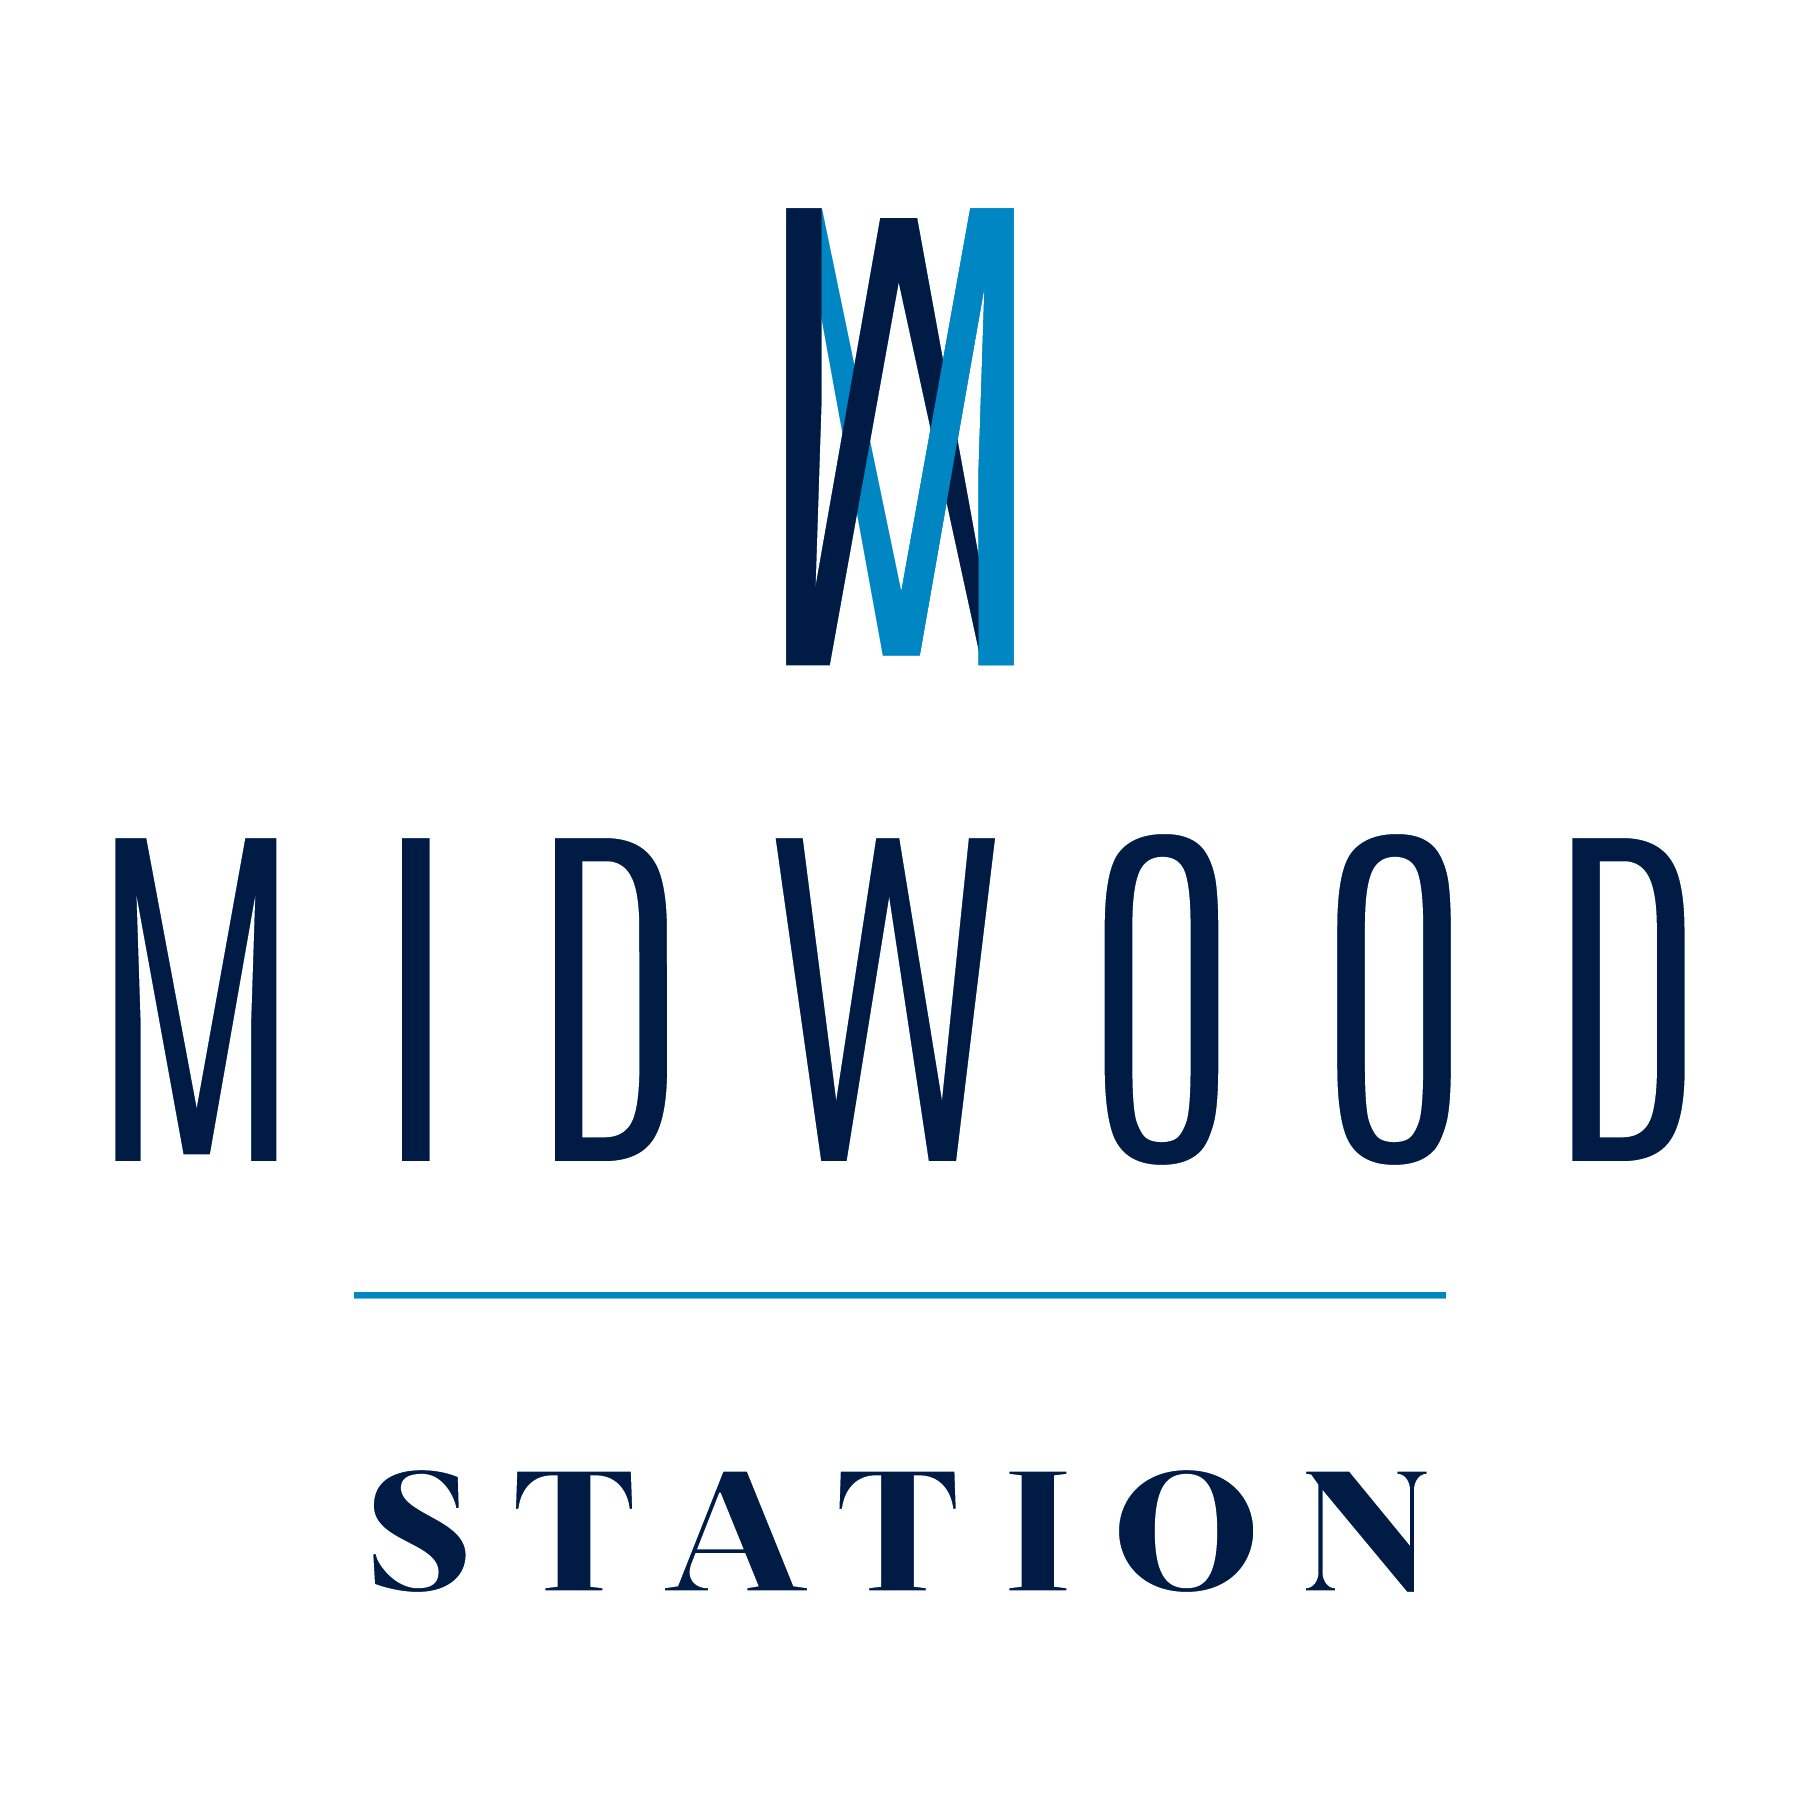 Midwood Station logo